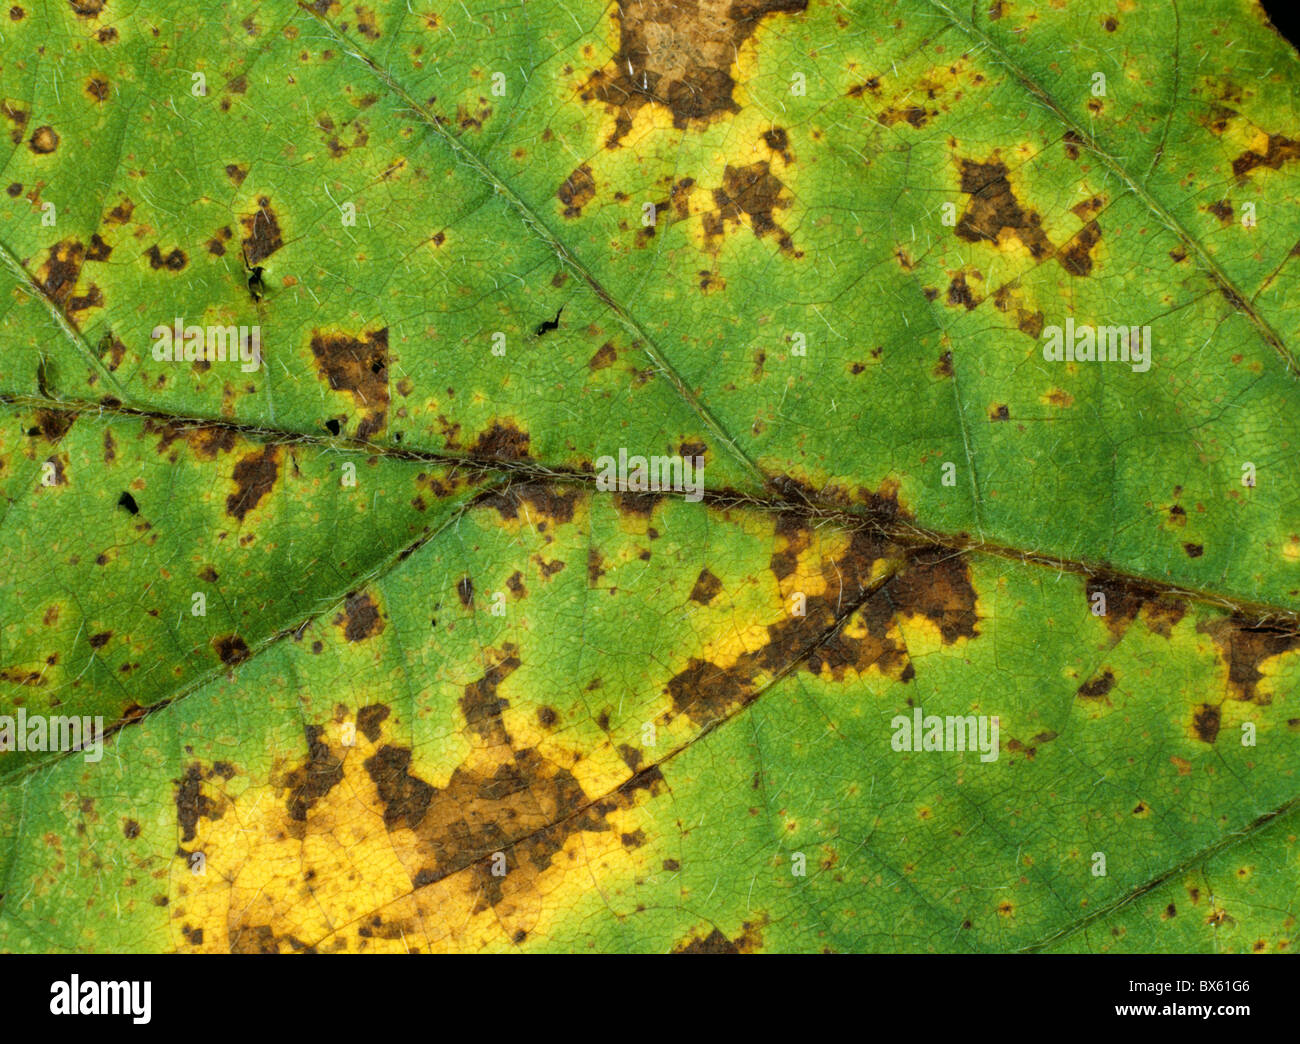 Bacterial blight (Pseudomonas syringae pv glycinea) on soya bean foliage Stock Photo